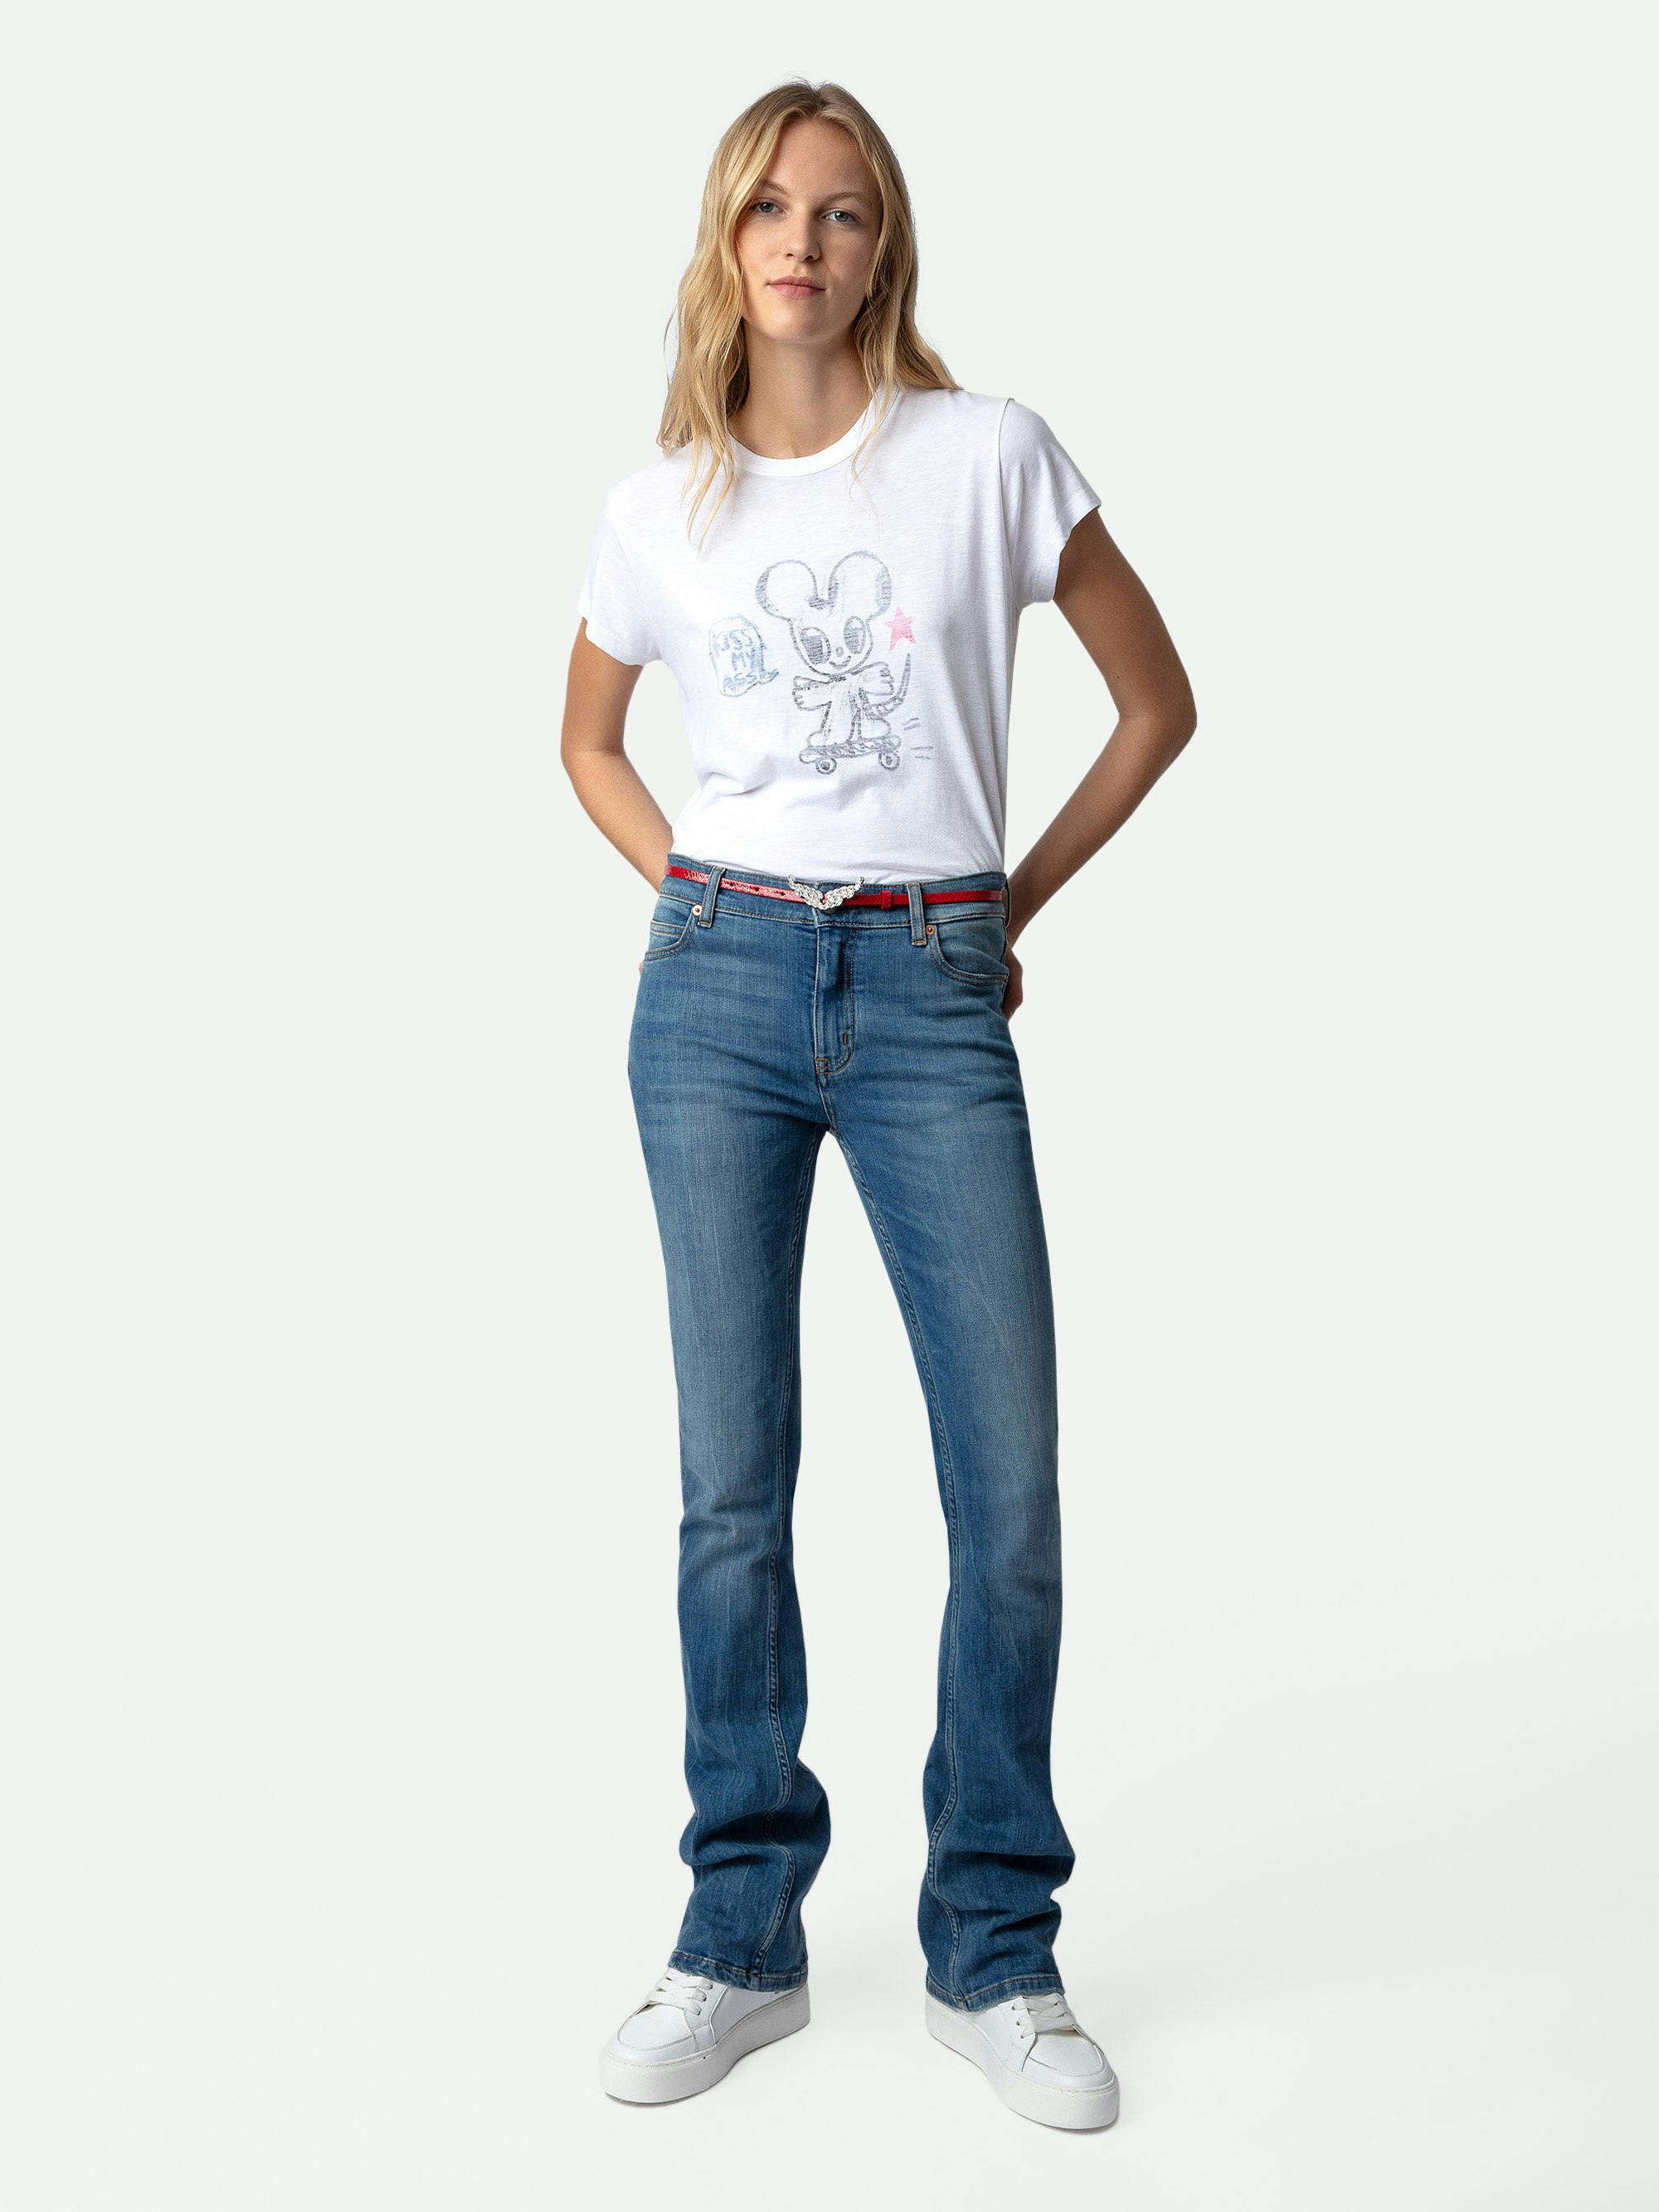 Woop Kiss My Ass T-shirt - Women's white cotton t-shirt with customized details designed by Humberto Cruz.